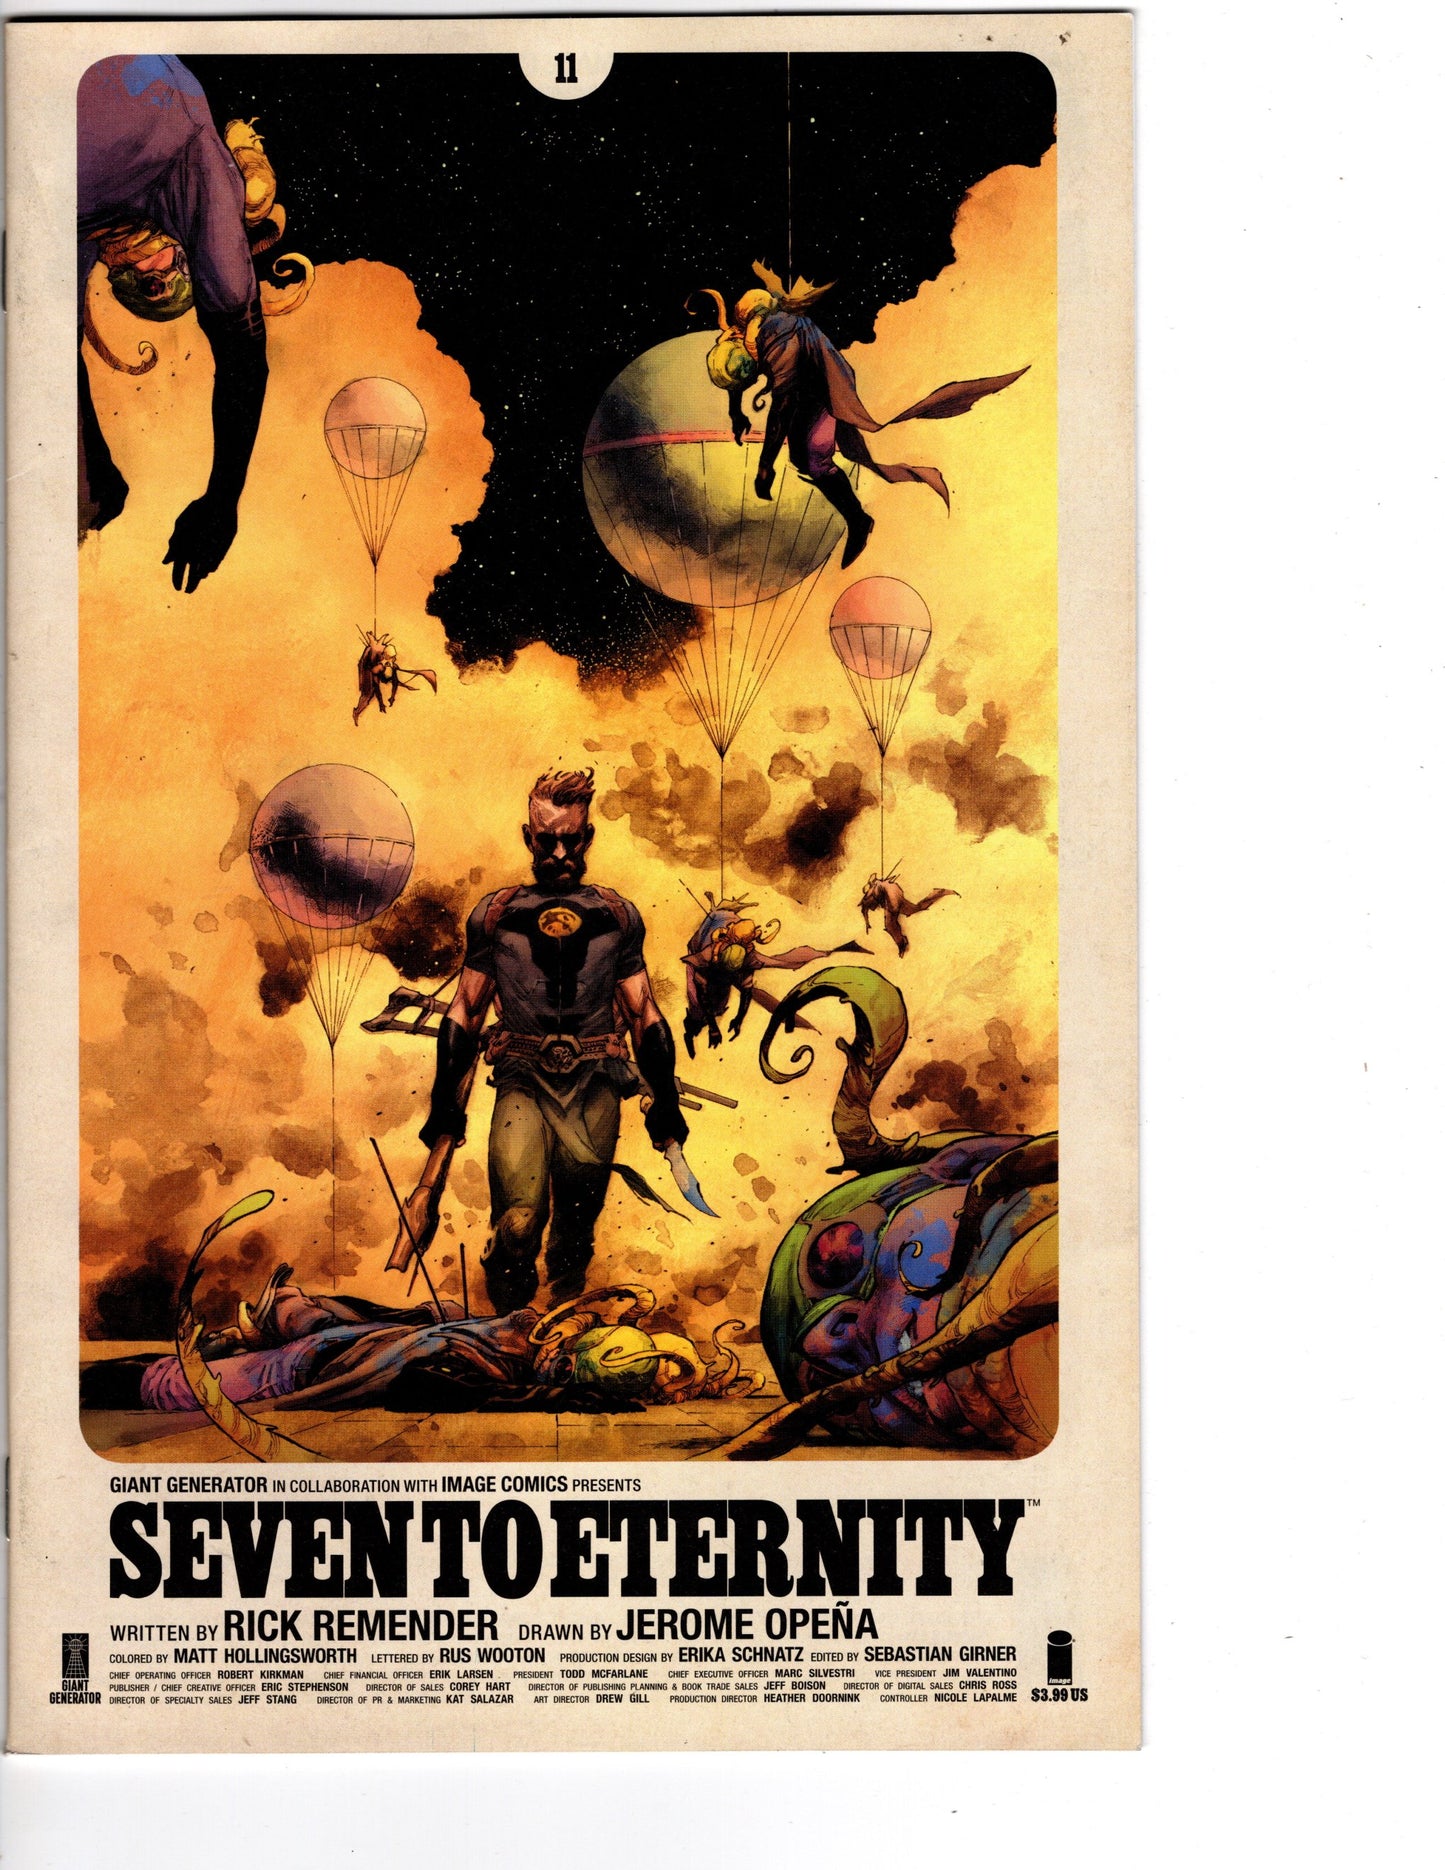 Seven to Eternity #11